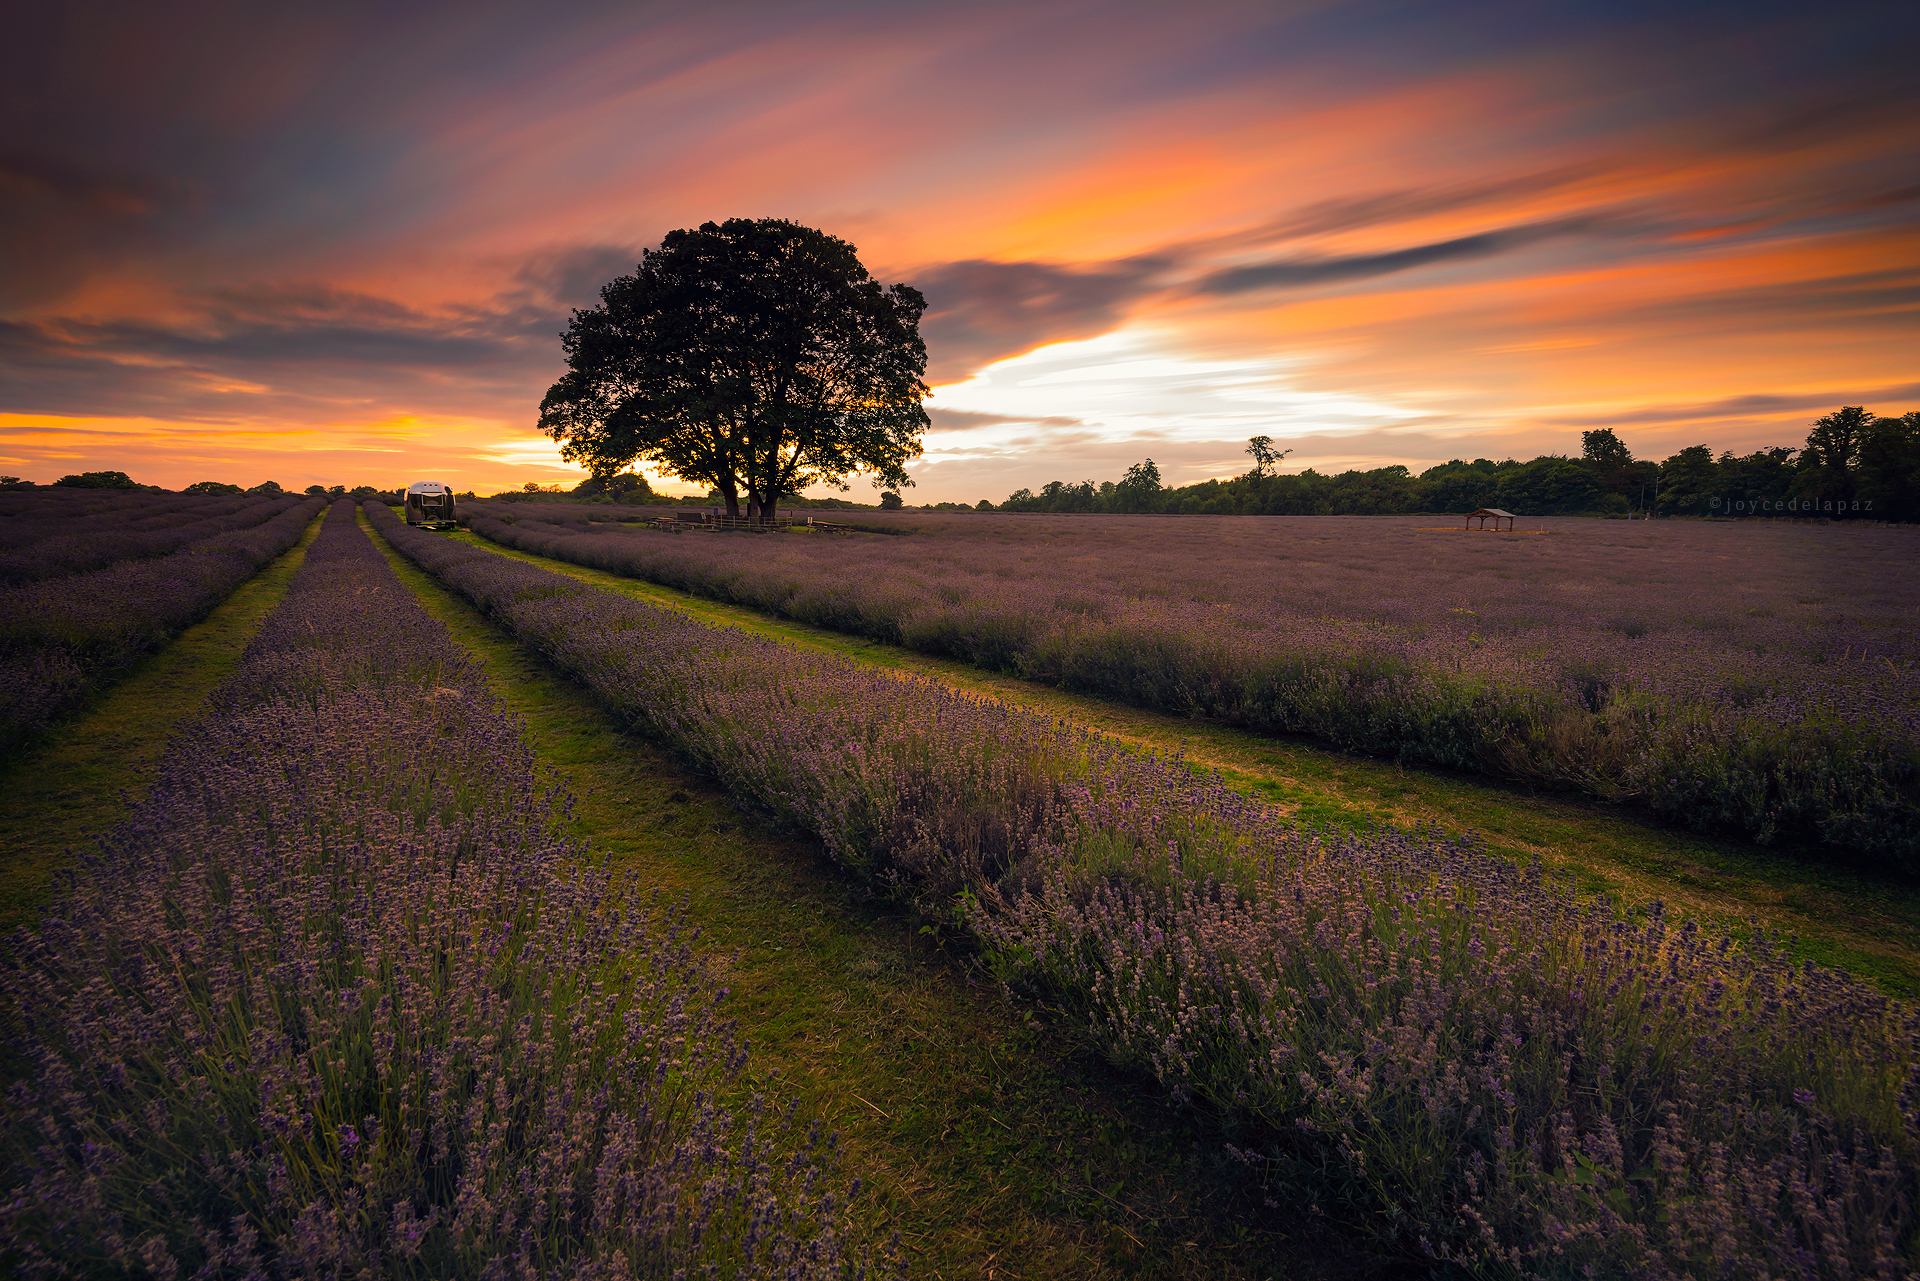  Sunkissed Lavender  Banstead, Surrey, England 